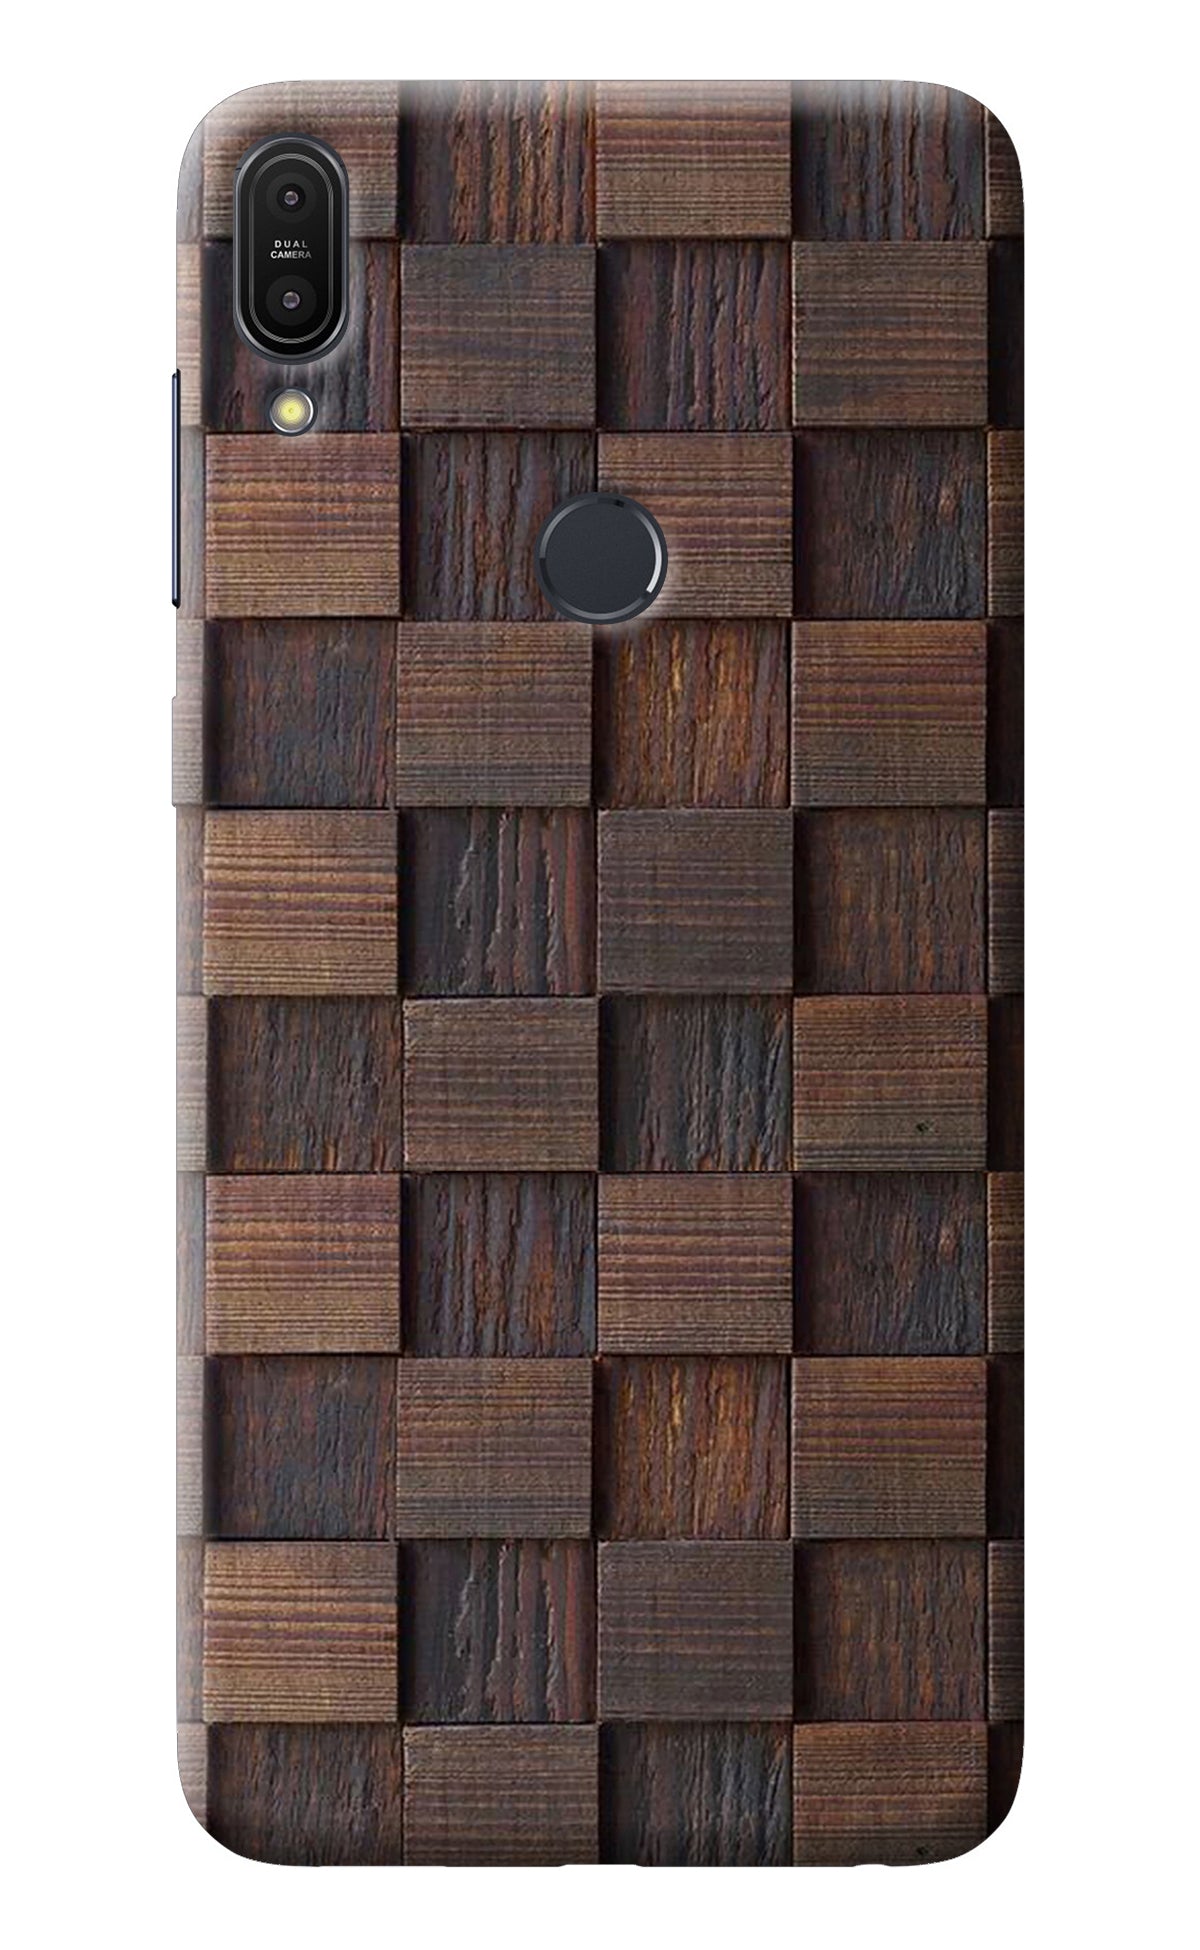 Wooden Cube Design Asus Zenfone Max Pro M1 Back Cover